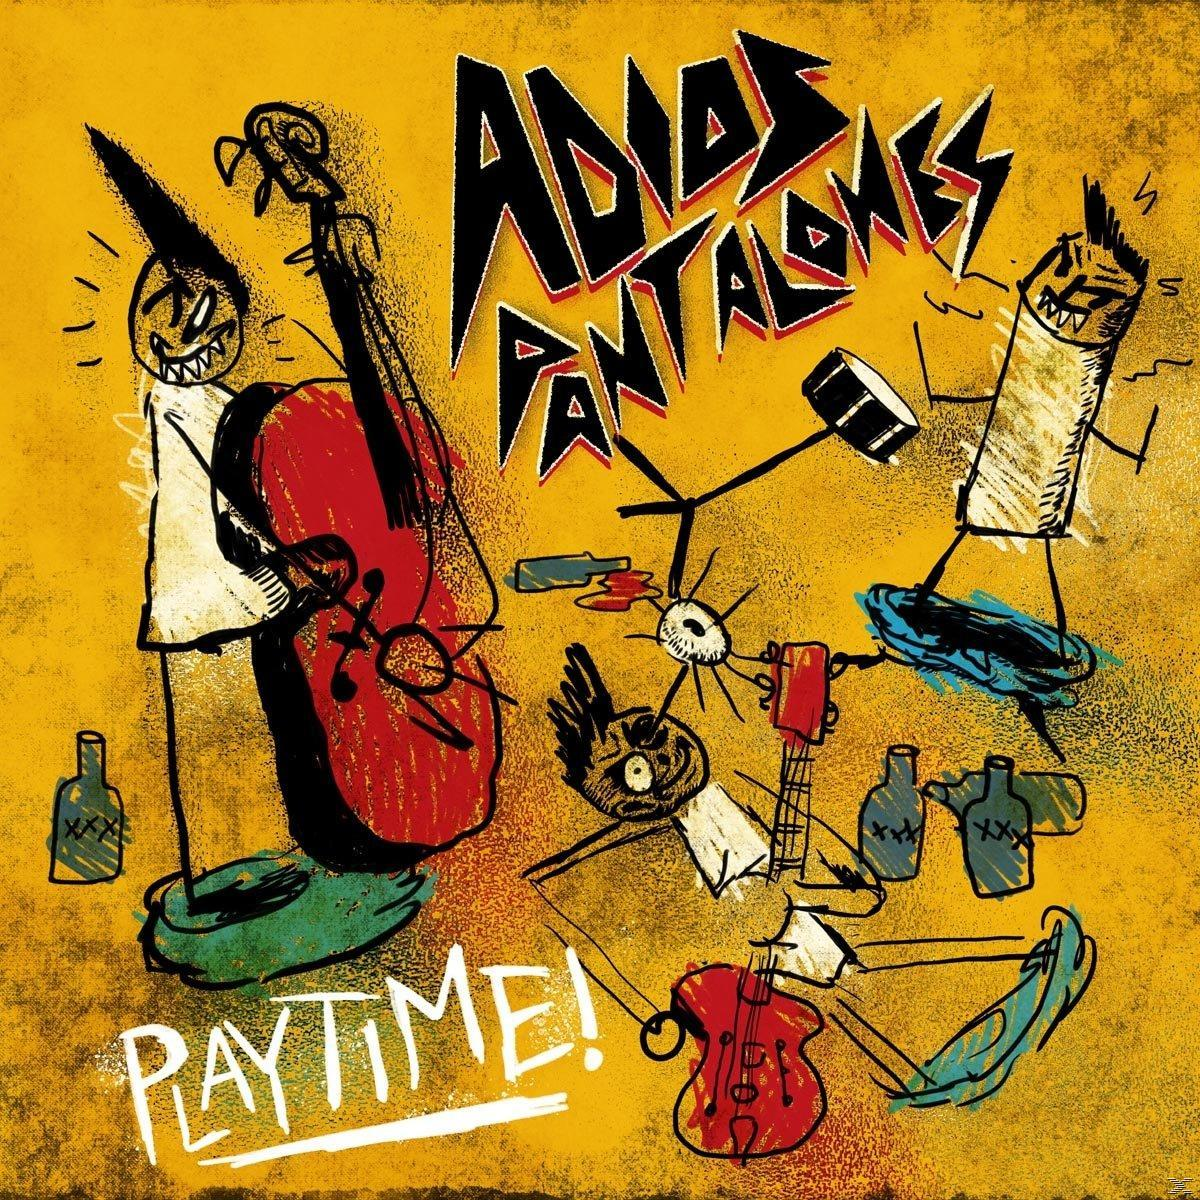 Pantalones - Adios - Playtime (CD)